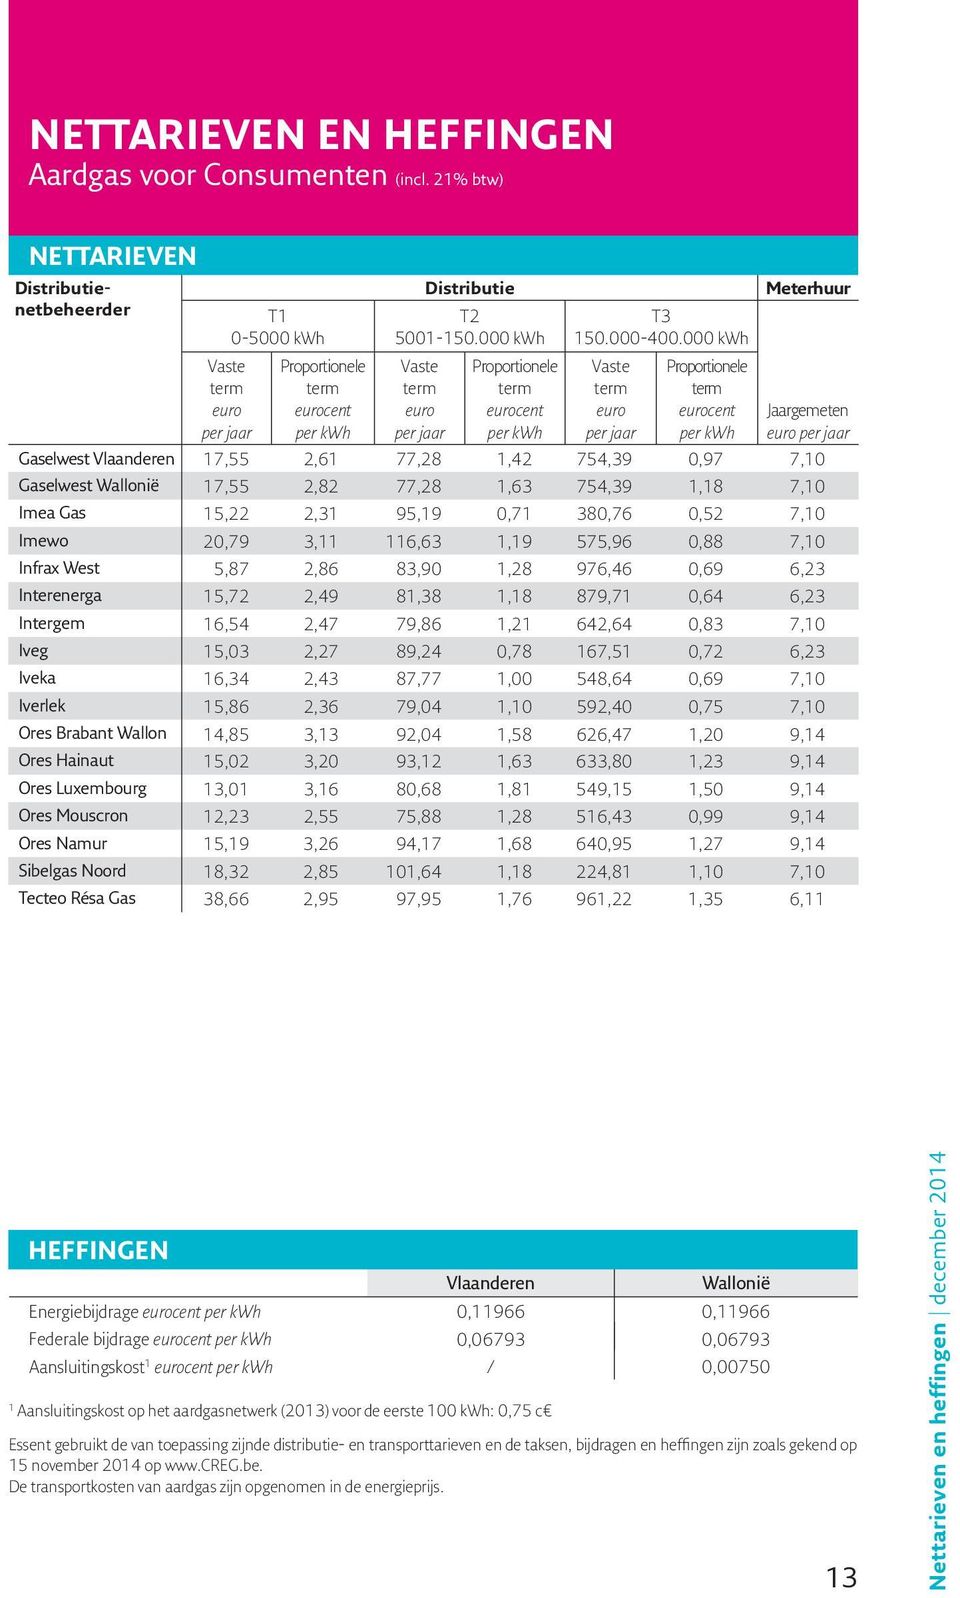 000 kwh Vaste euro per jaar Proportionele eurocent per kwh Jaargemeten euro per jaar Gaselwest Vlaanderen 17,55 2,61 77,28 1,42 754,39 0,97 7,10 Gaselwest Wallonië 17,55 2,82 77,28 1,63 754,39 1,18